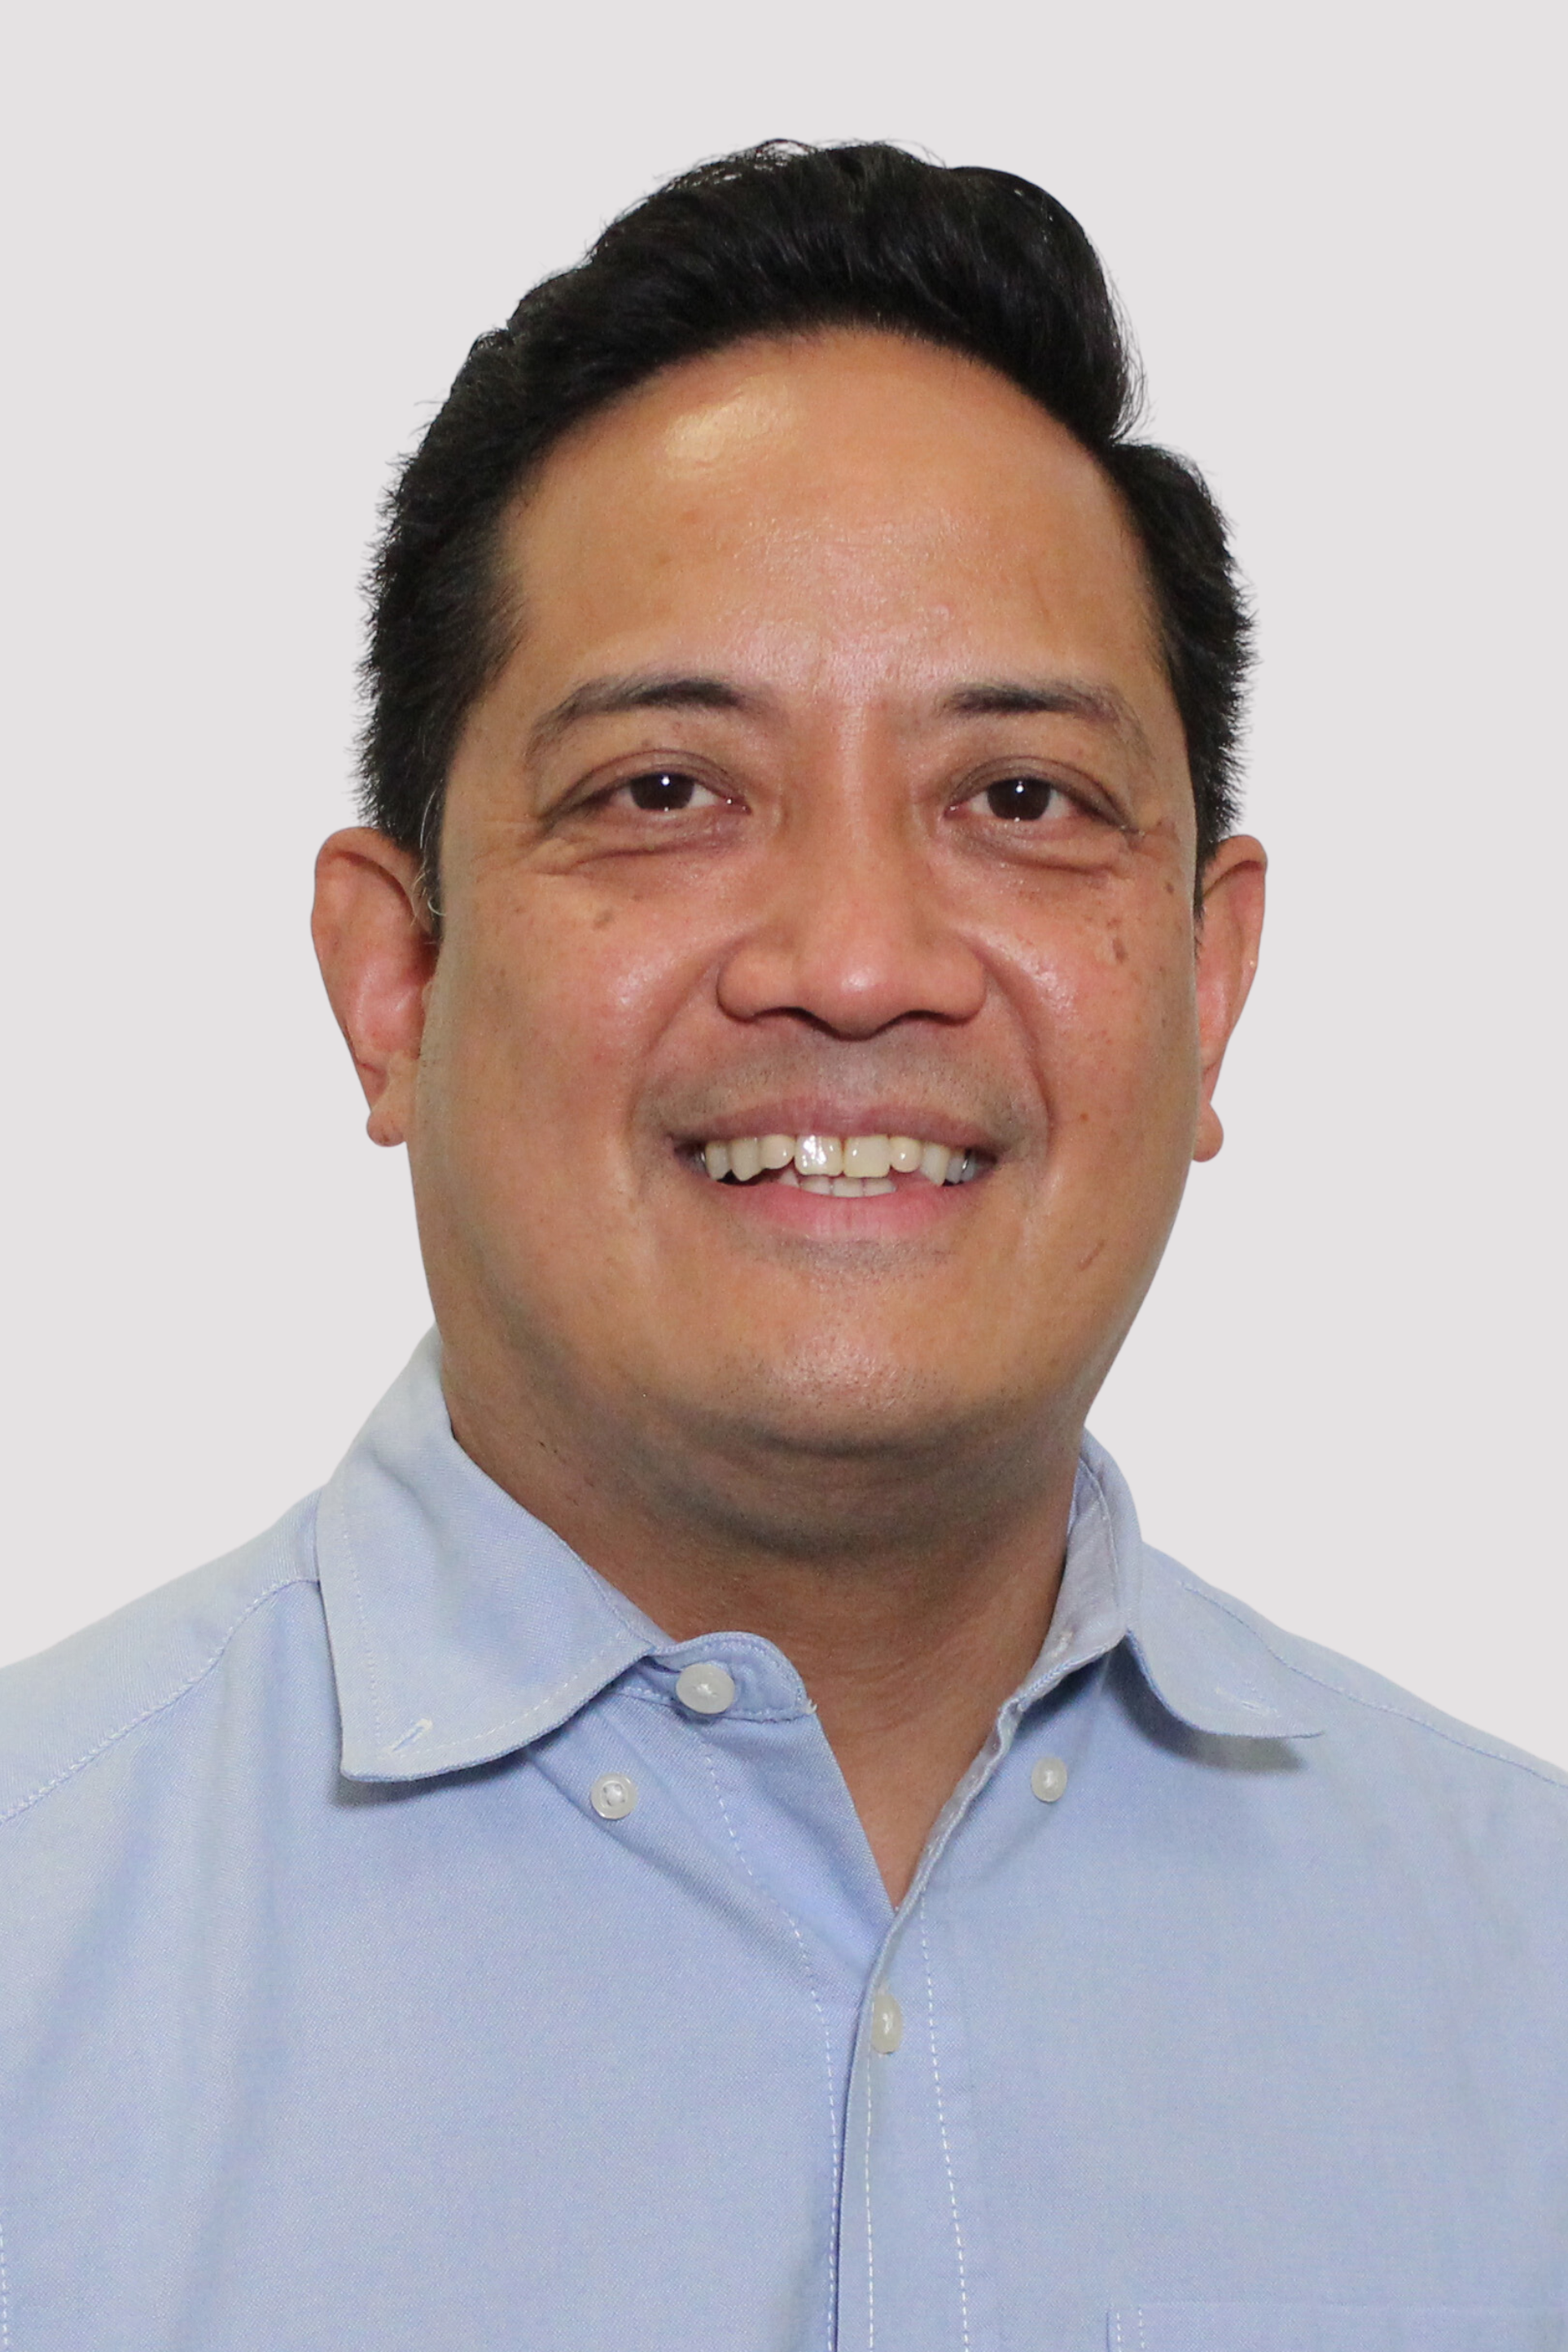 Adrian Manalang